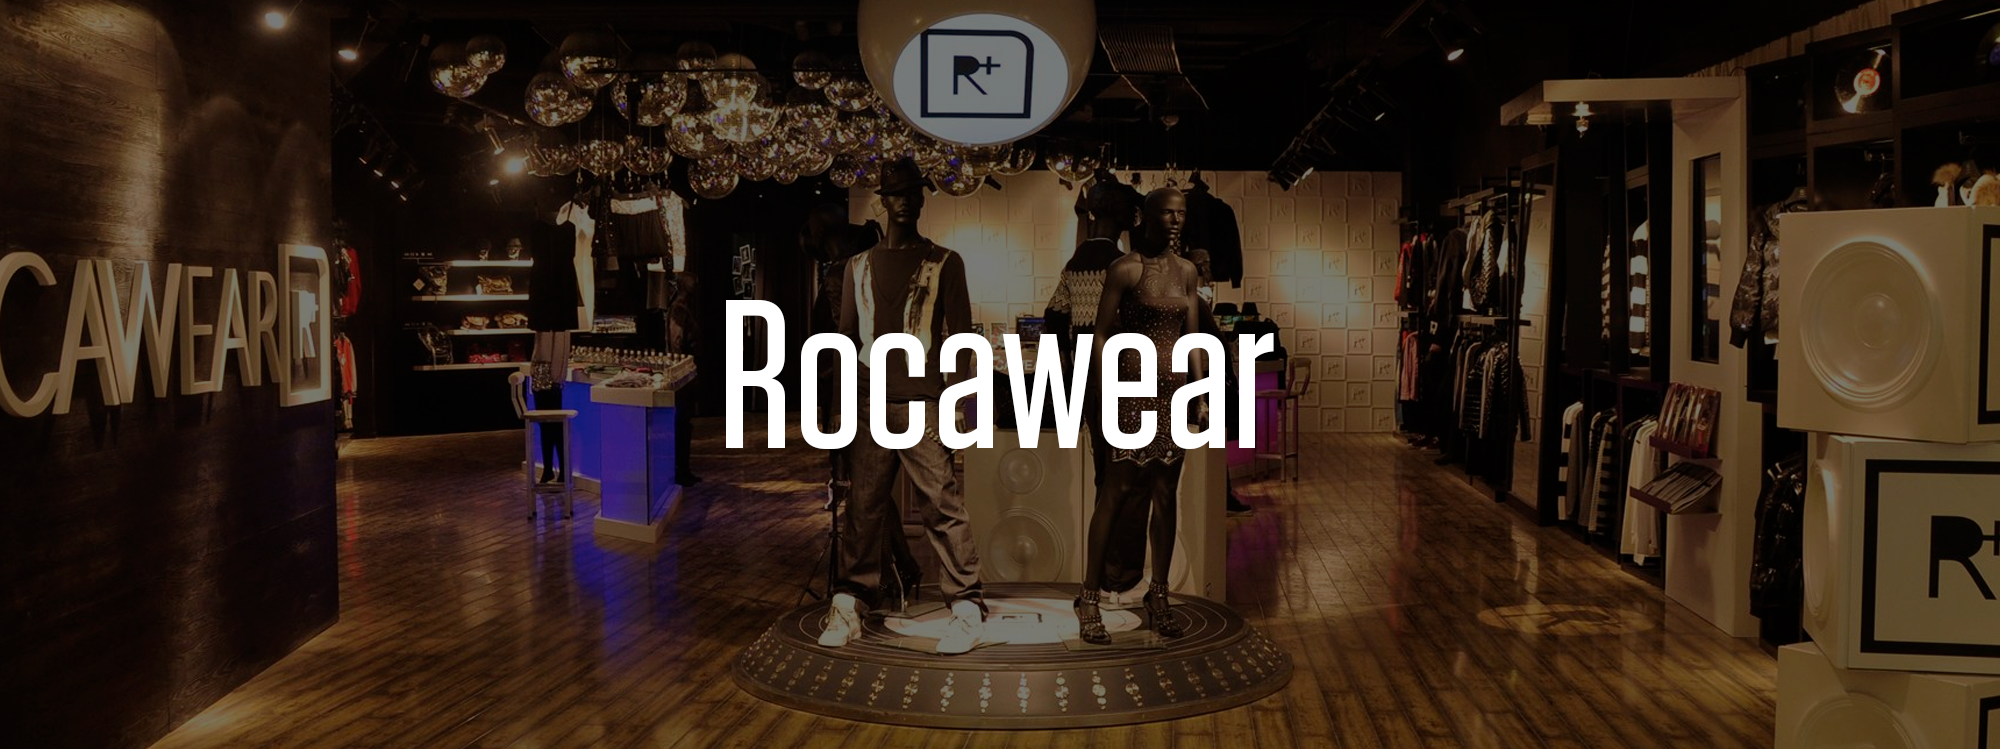 Rocawear - Wikipedia